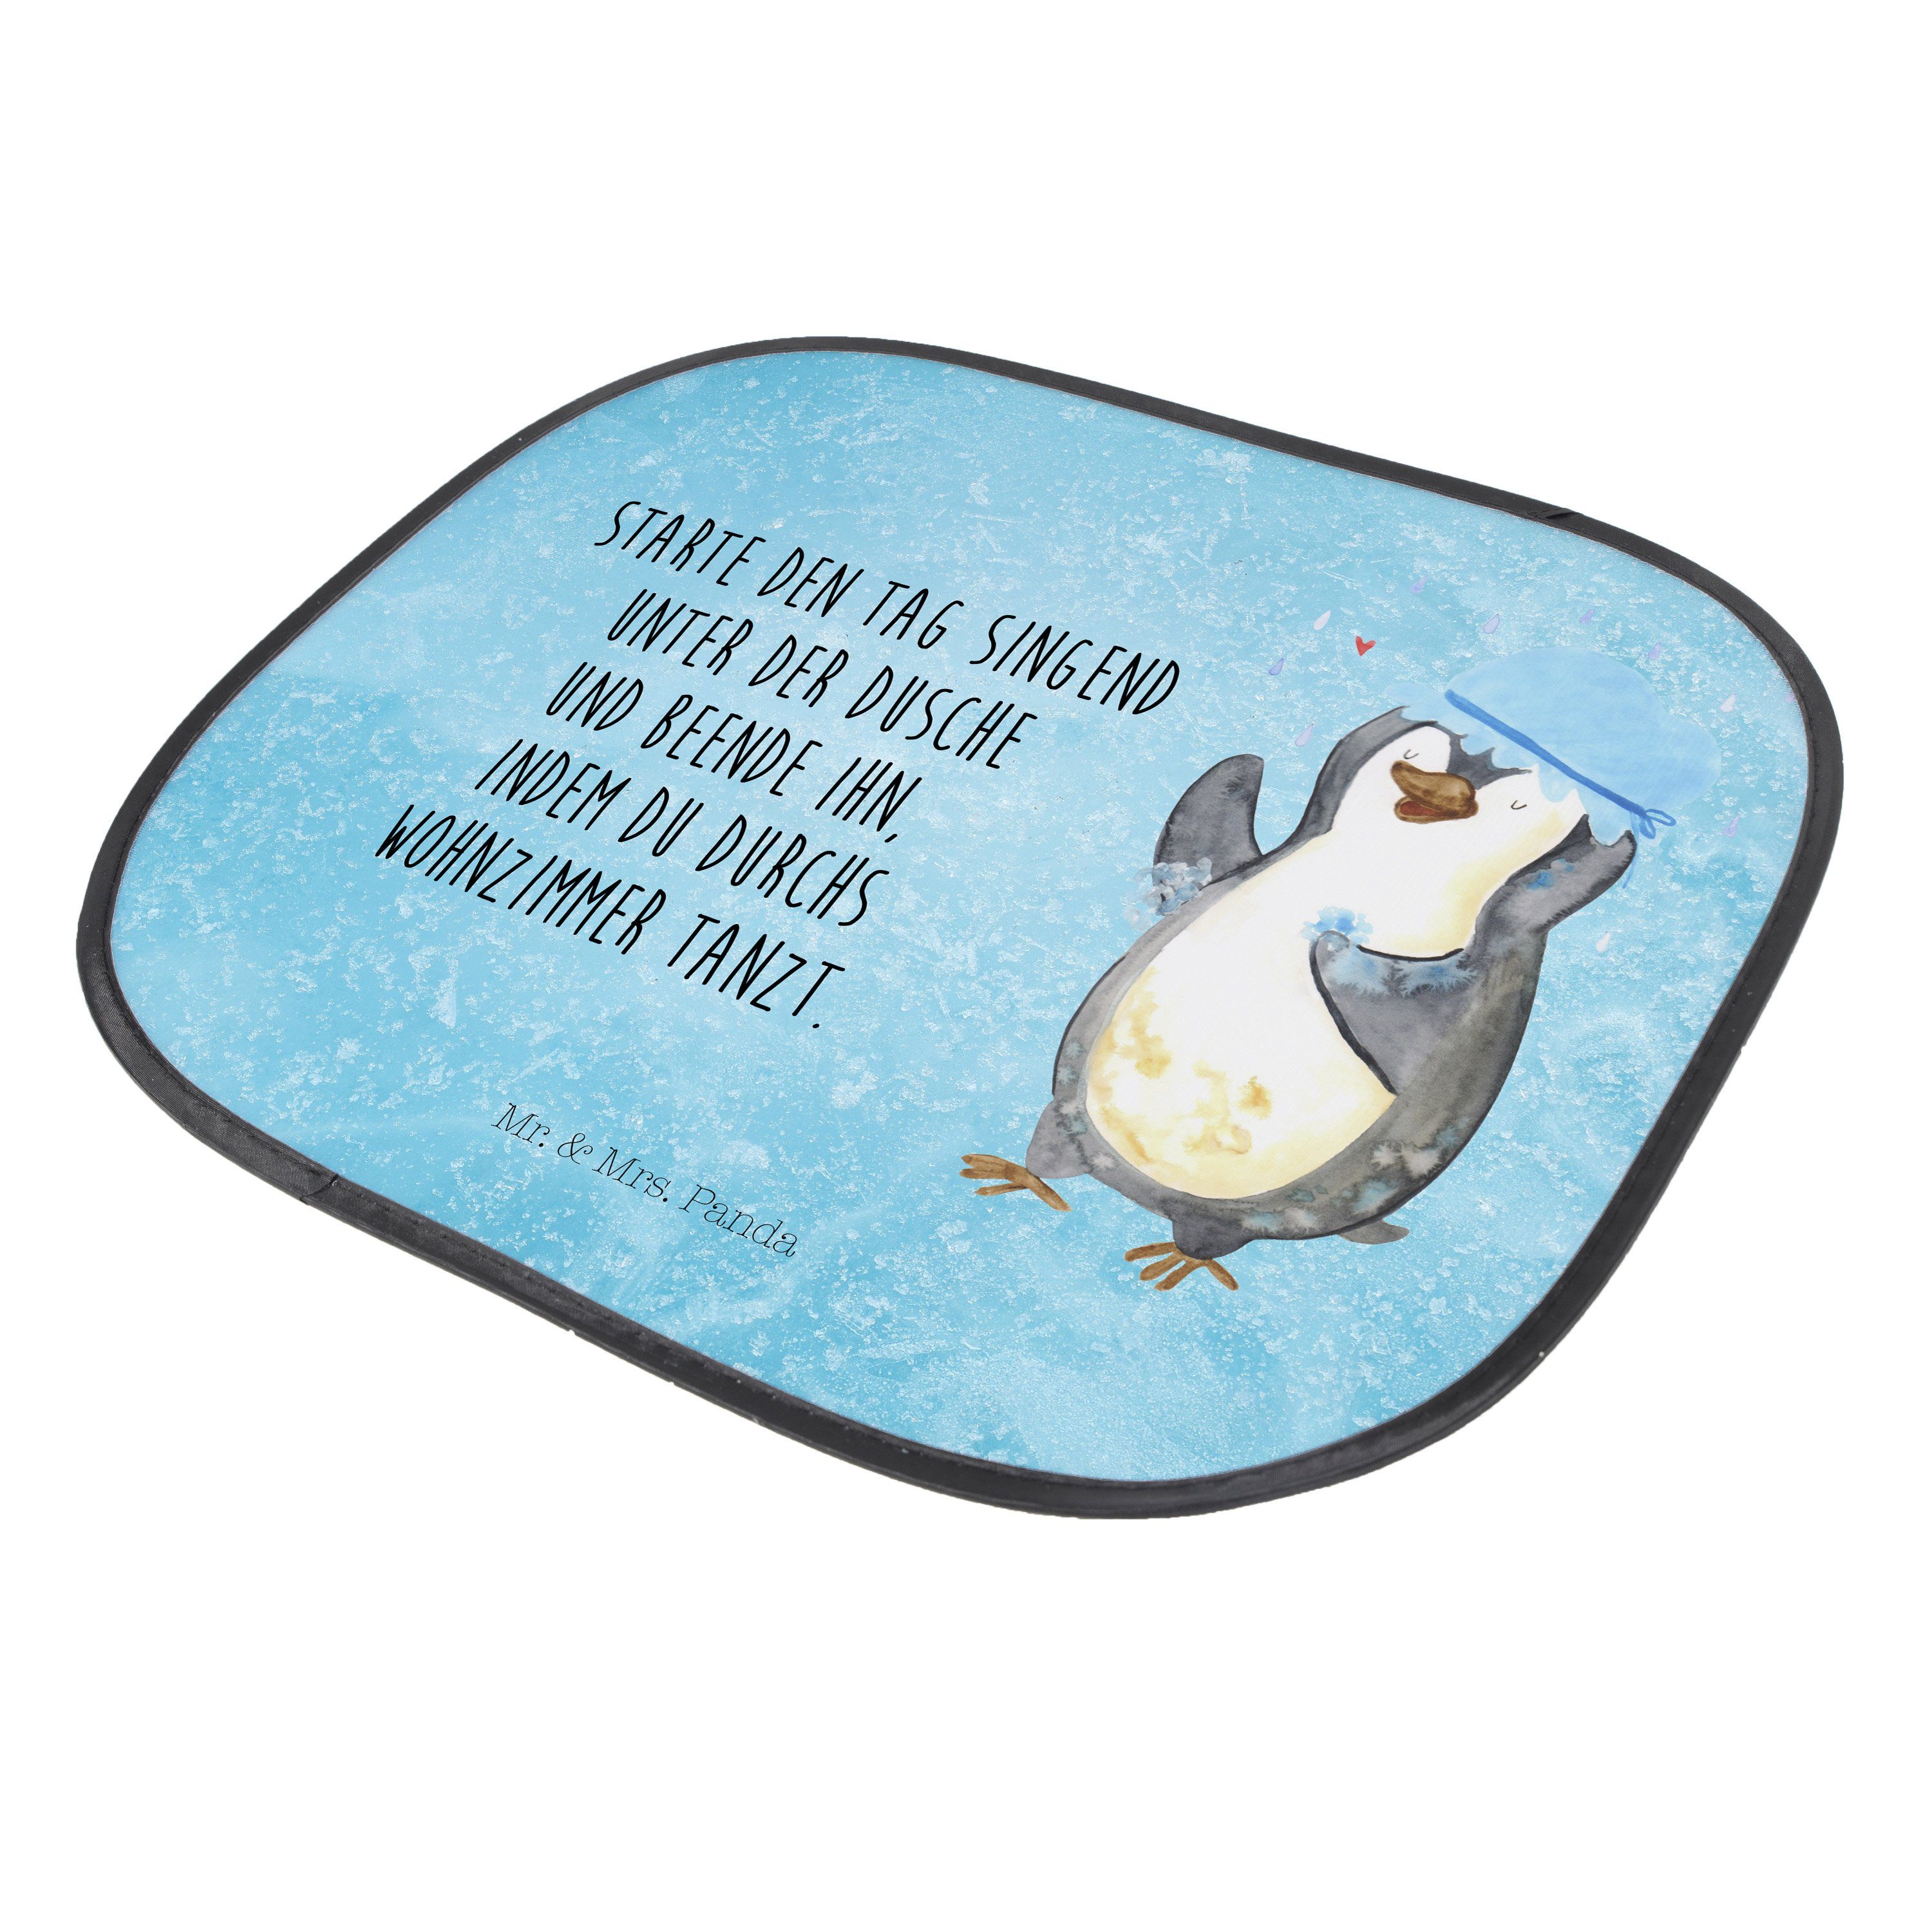 Sonnenschutz Pinguin duscht - Sonnenschutz Kinde, Eisblau baden, Sonne, - Mrs. Seidenmatt & Geschenk, Mr. Panda